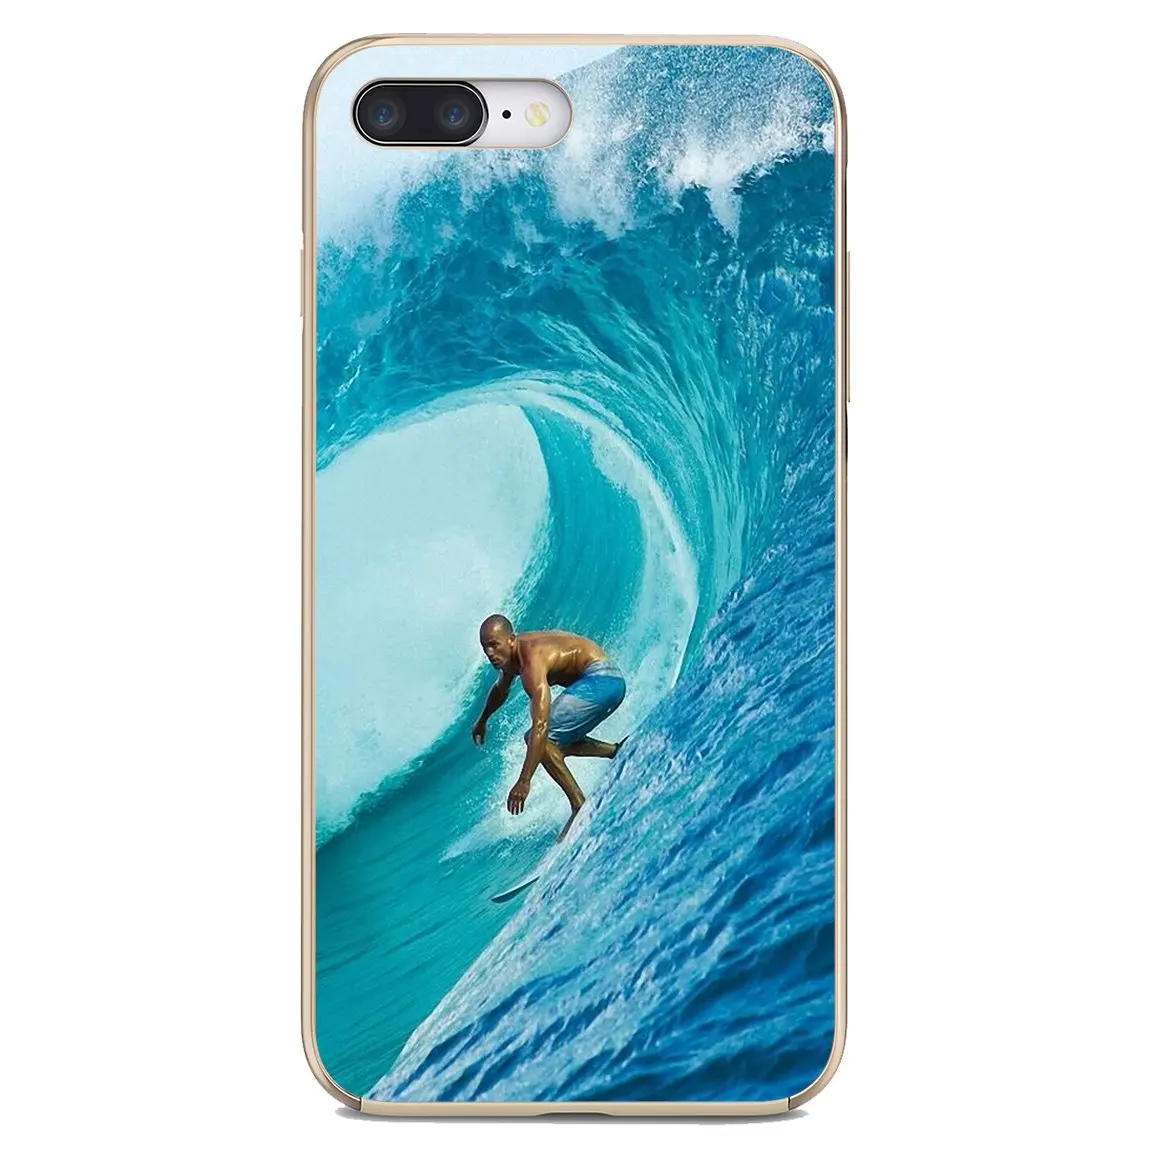 Мягкий чехол из ТПУ для LG G5 G6 G7 Q6 Q7 Q8 Q9 V10 V20 V30 X Power 2 3 Spirit G2 G3 G4 Mini Sea-wave-surf-summer-surf-ocean -